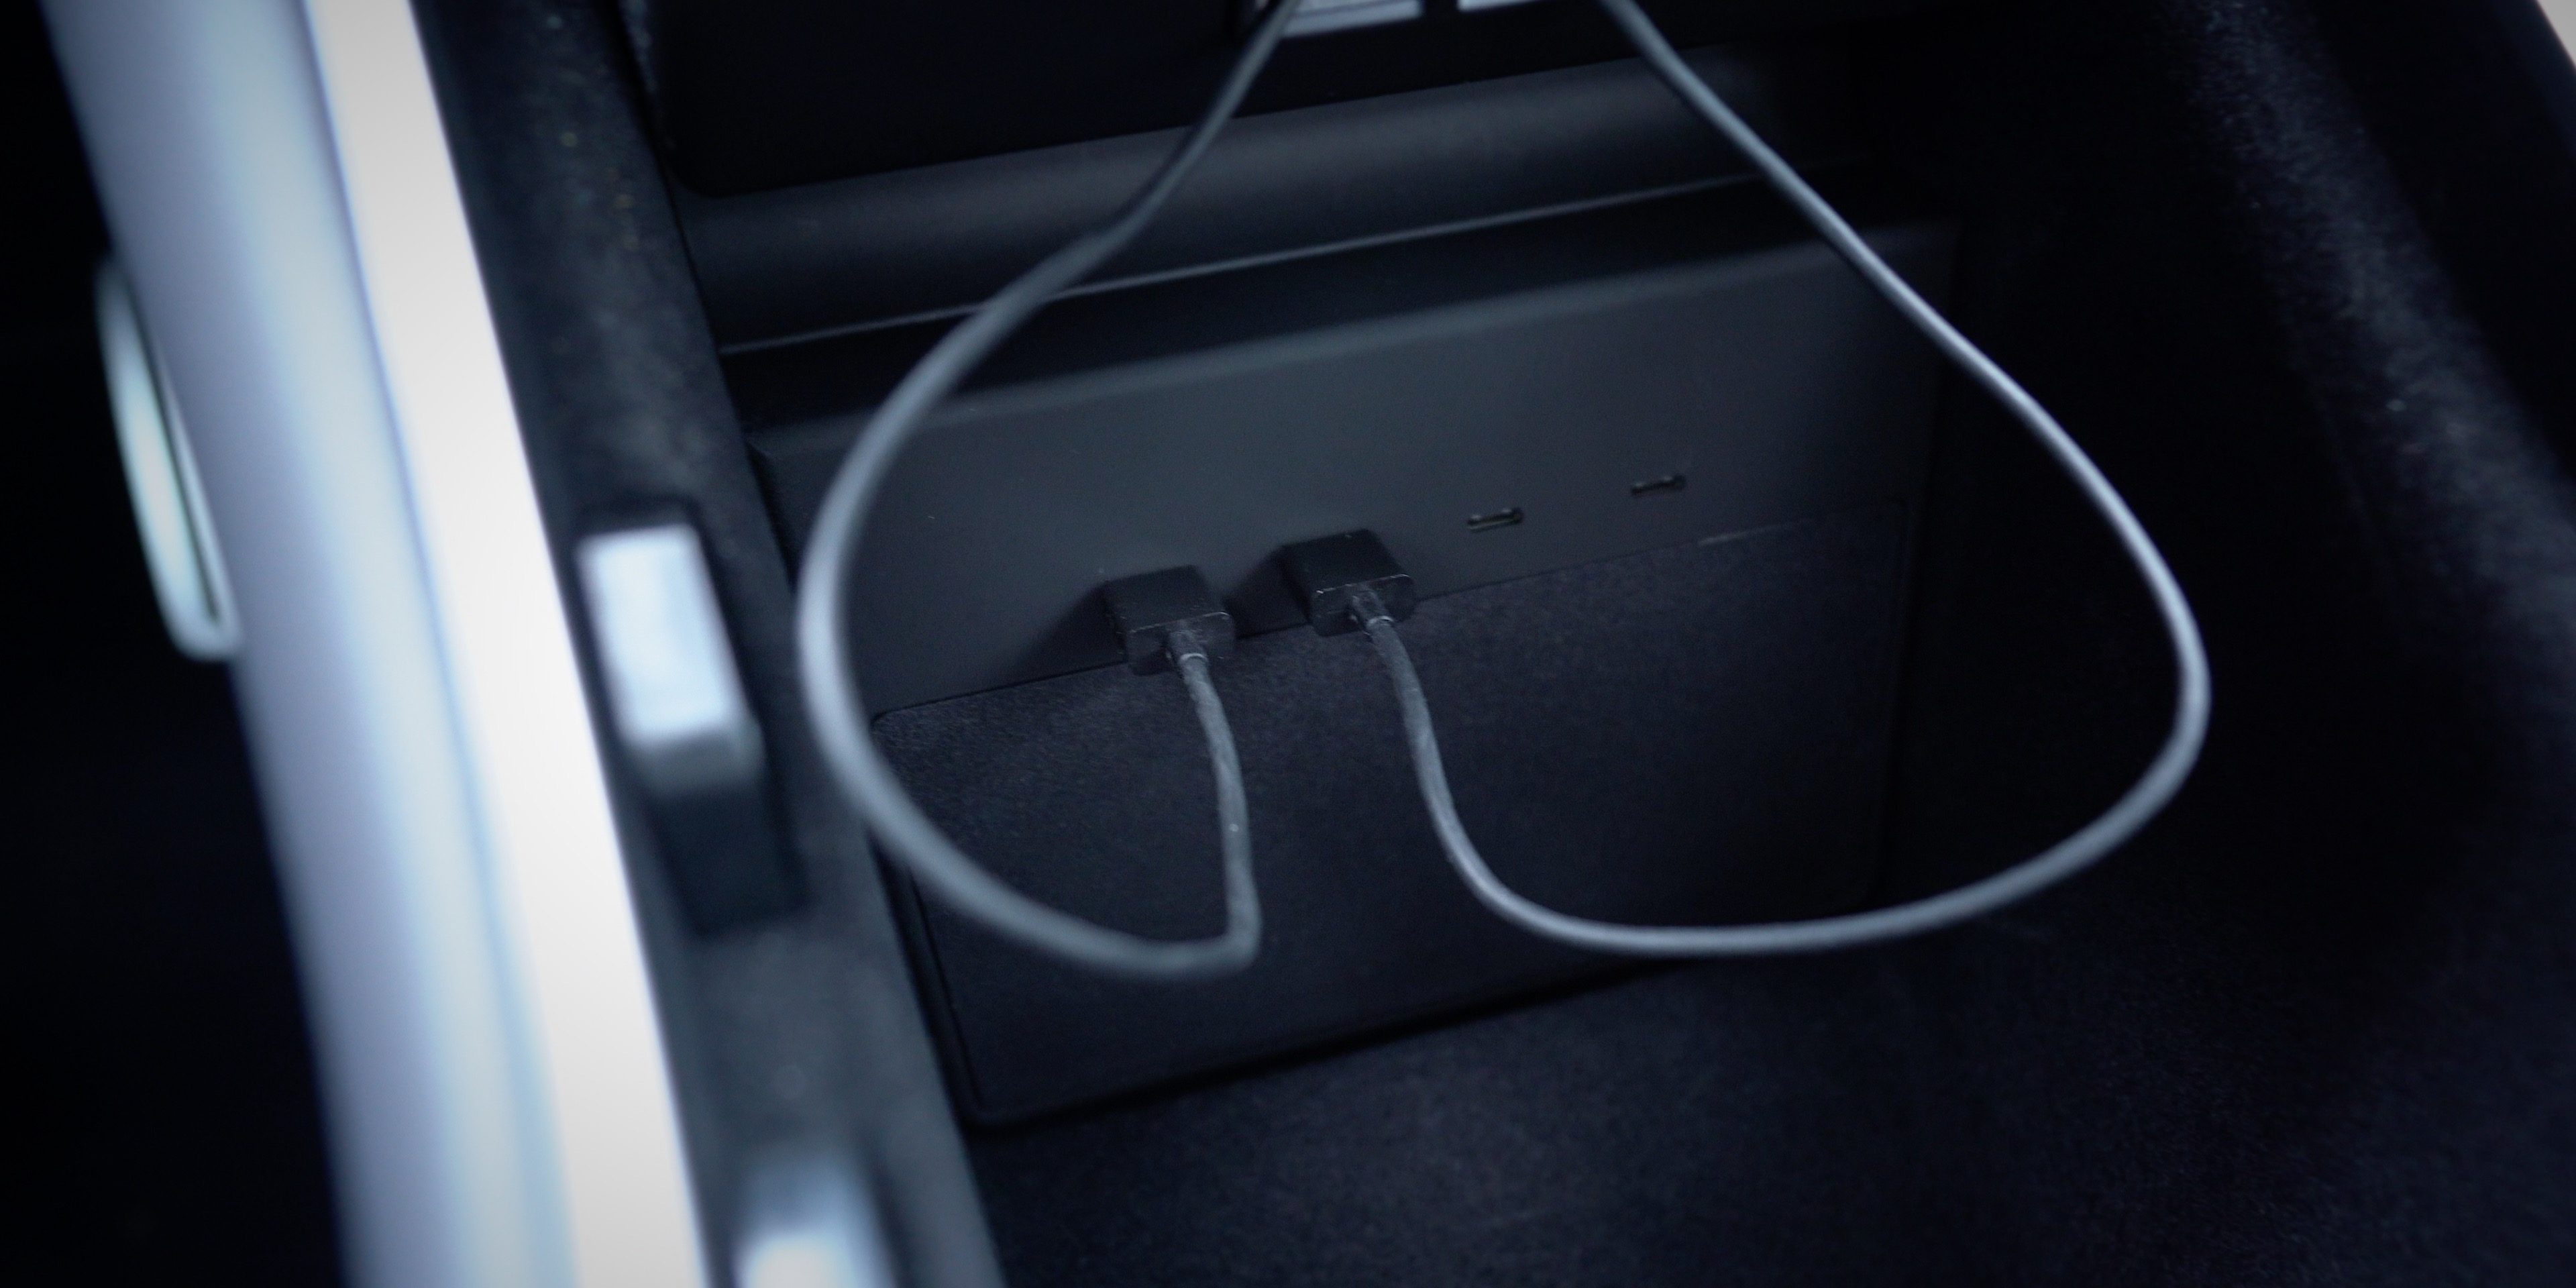 Review: Jedua USB Hub for Tesla Model 3 [Video]